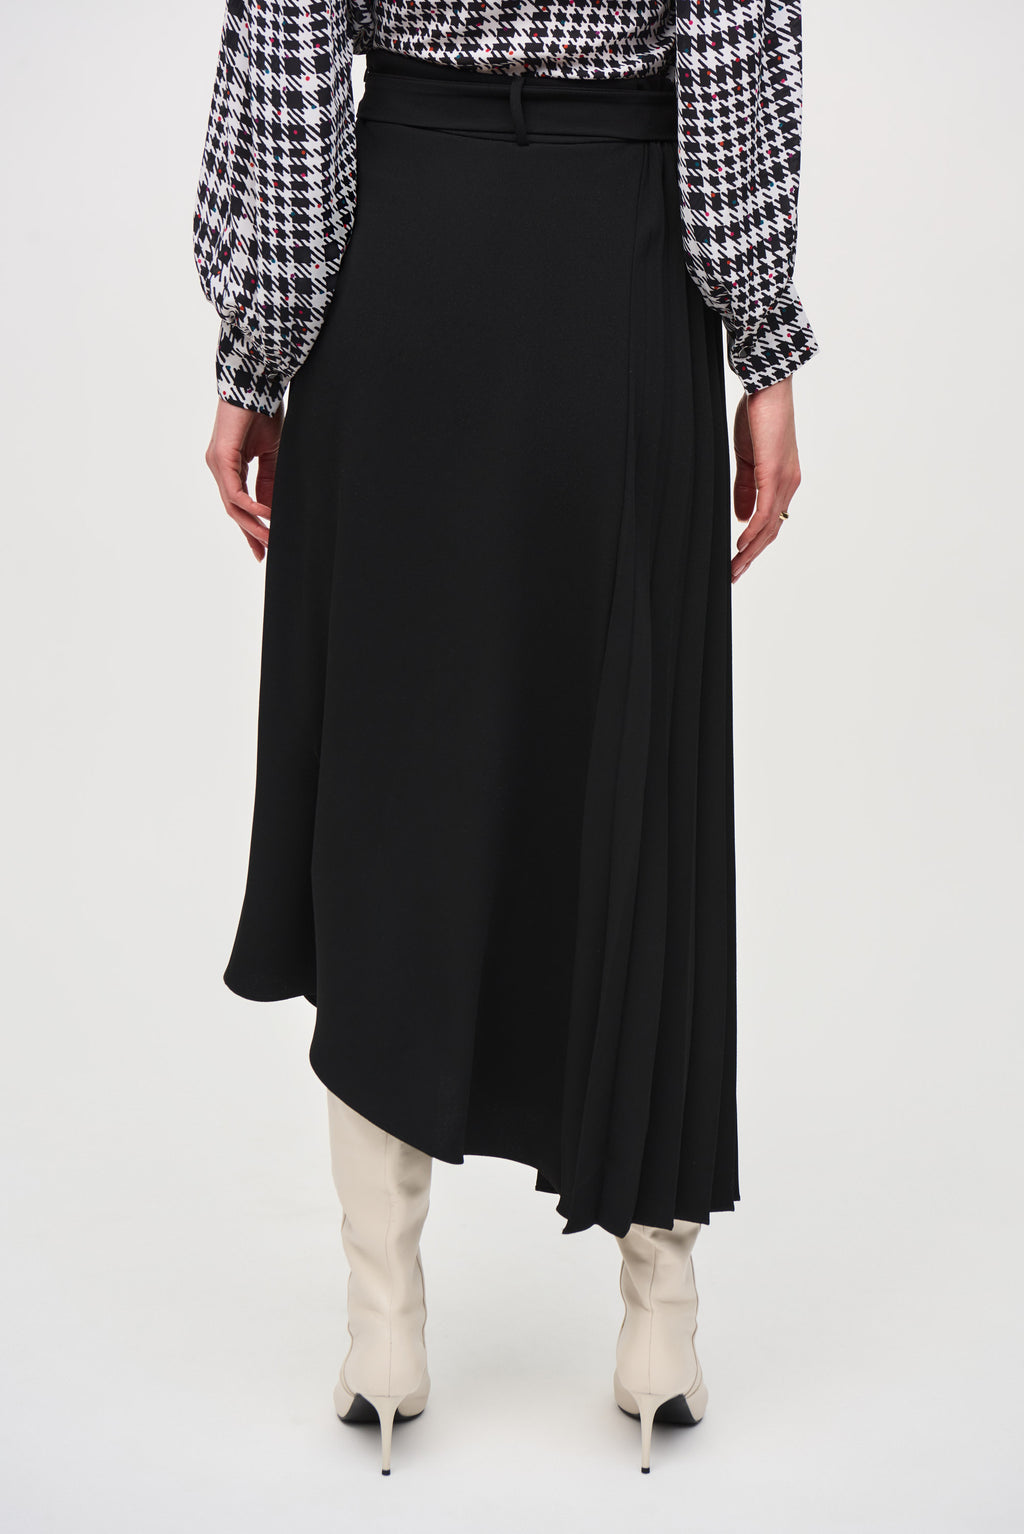 Joseph Ribkoff Black Asymmetrical Skirt Style 243117